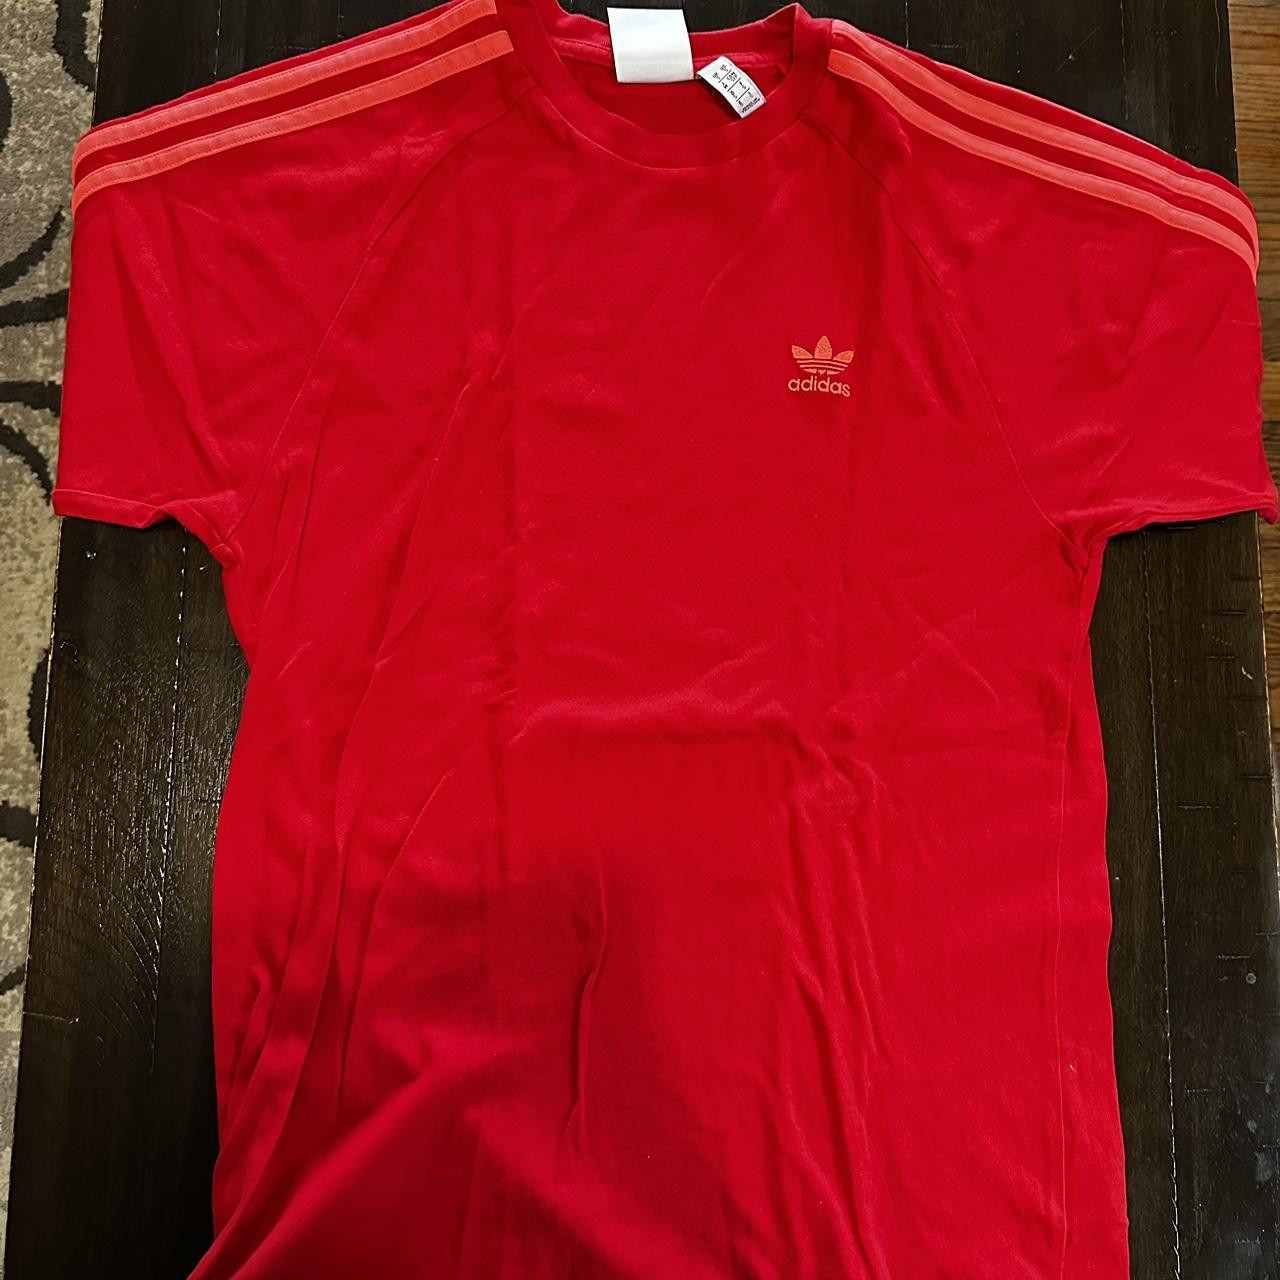 Adidas Originals Men's Red Shirt